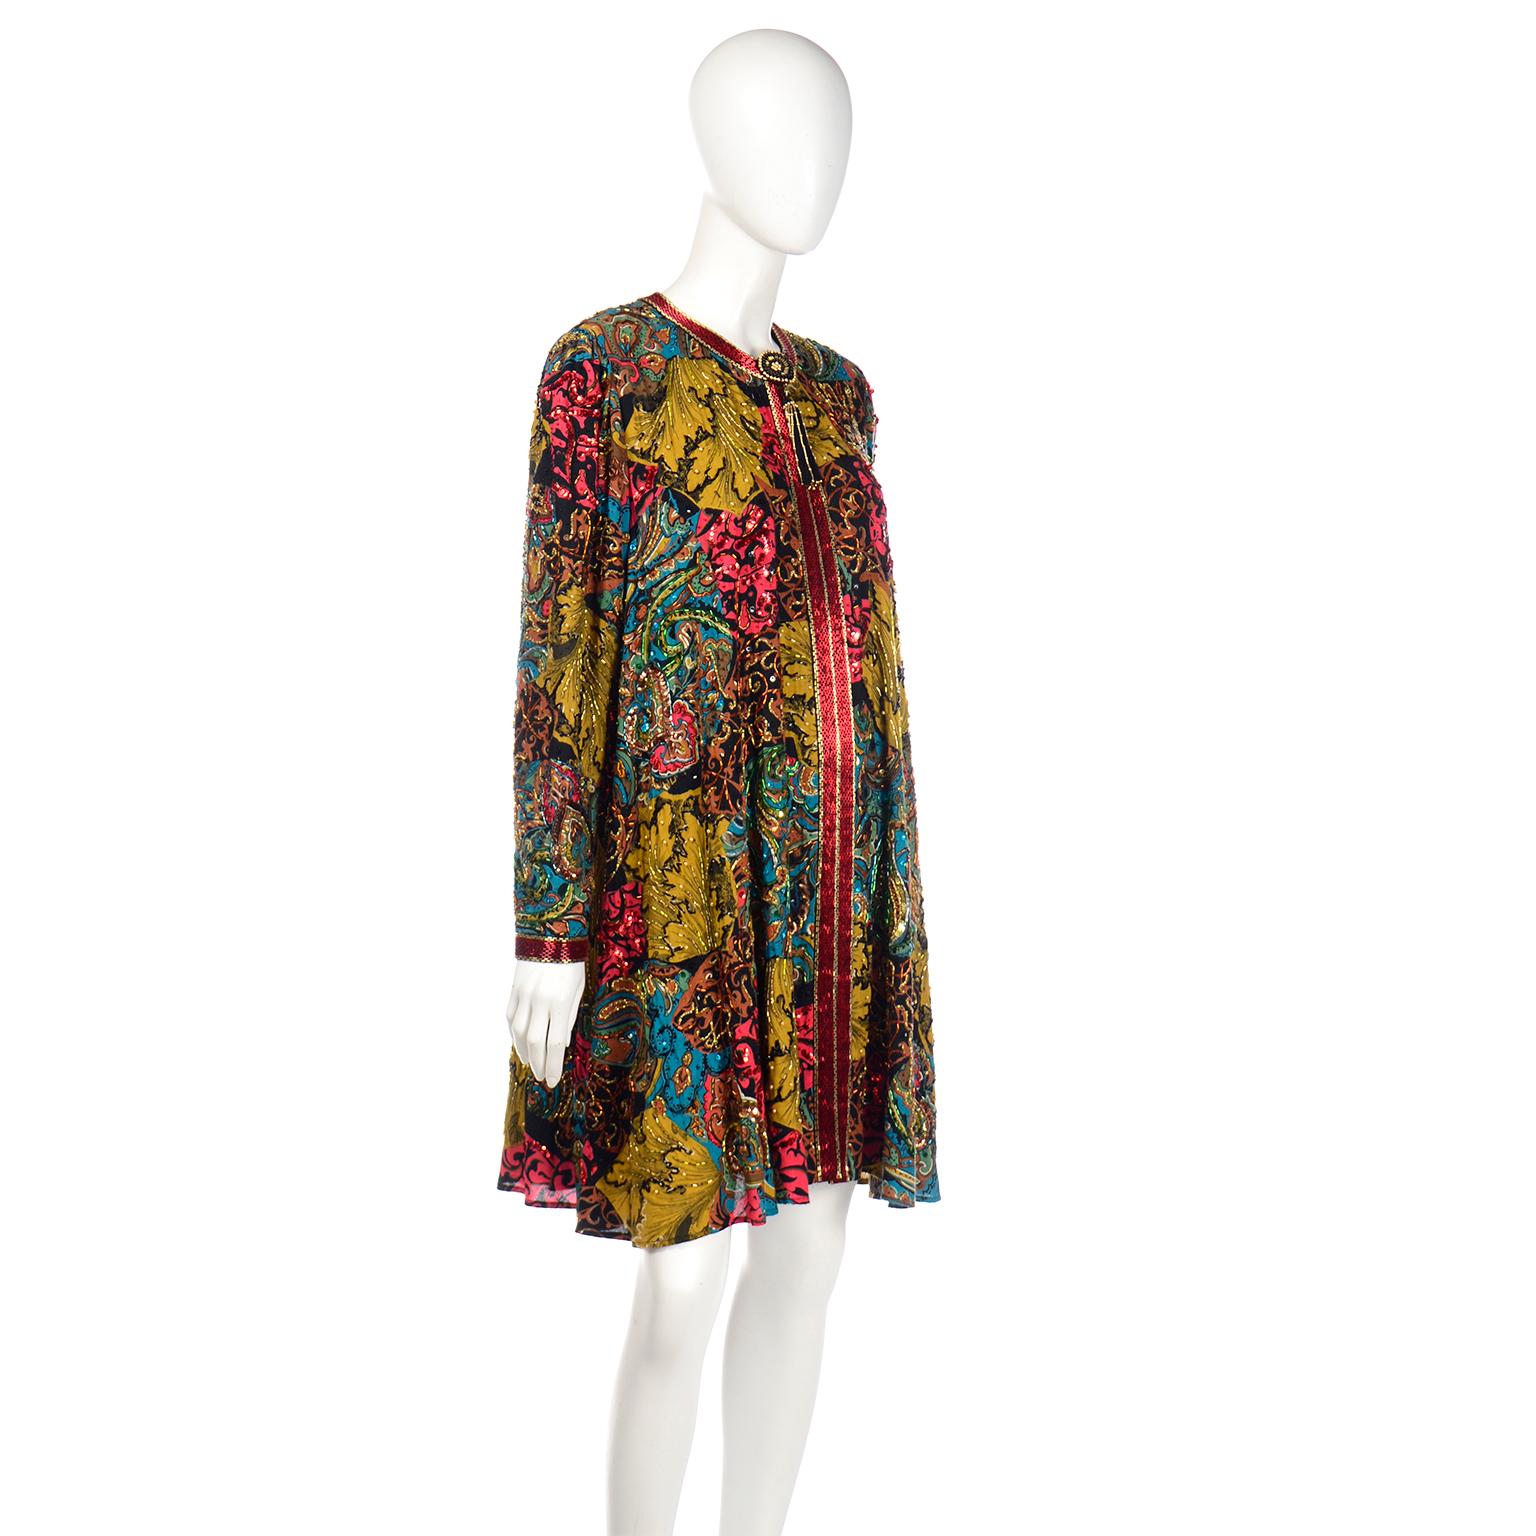 Vintage Diane Freis Beaded Sequin Swing Jacket in Multi Colored Baroque ...